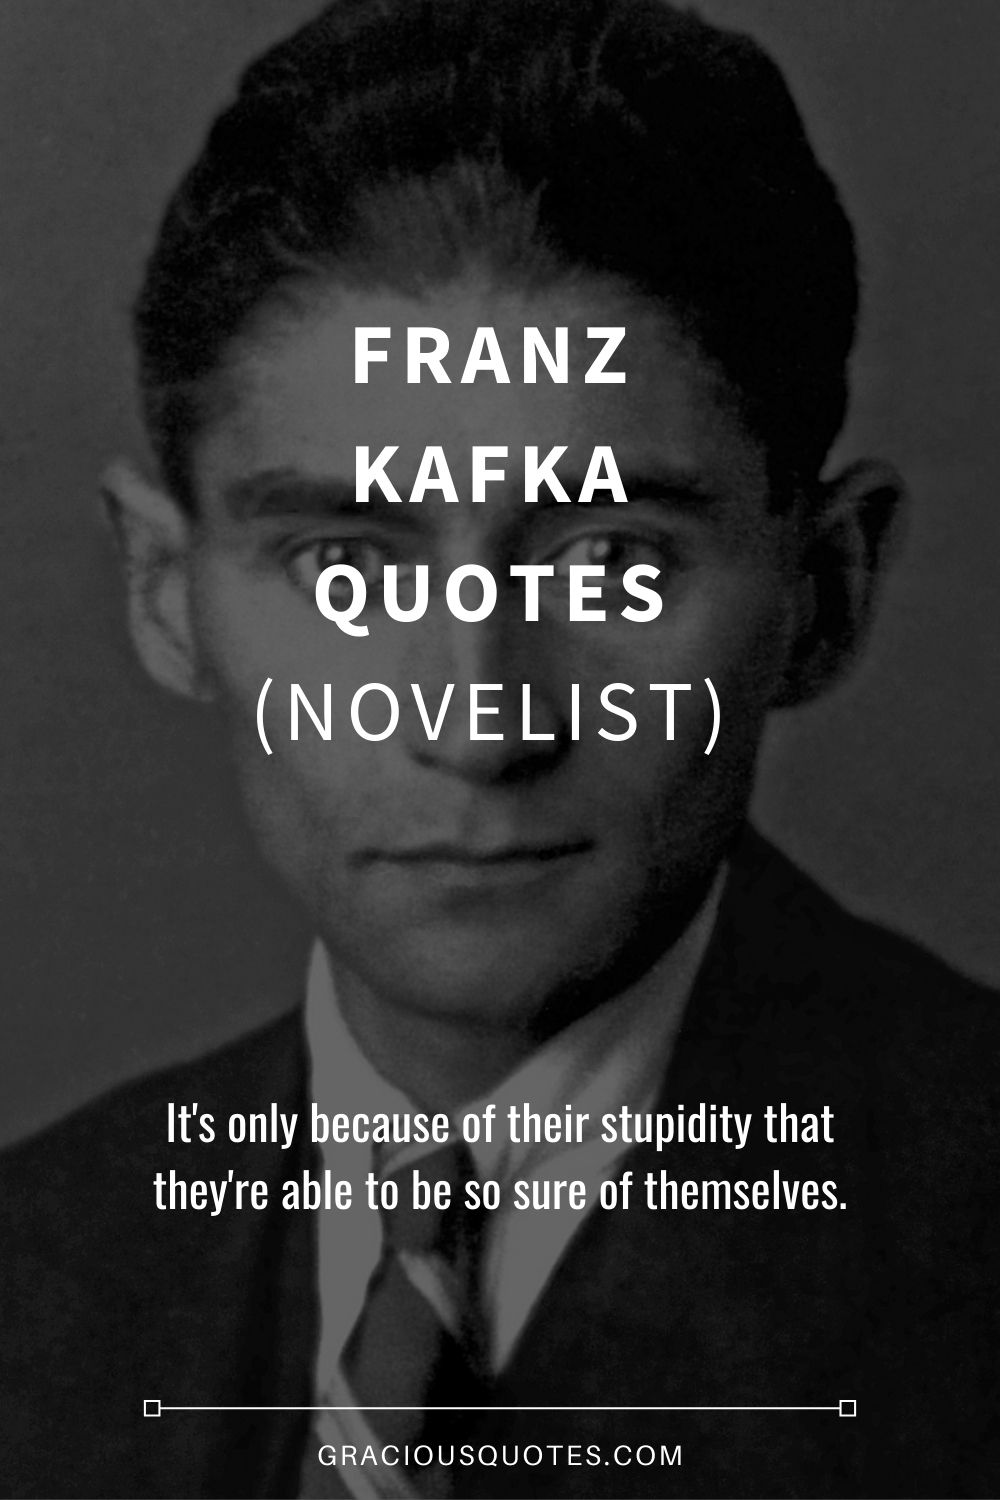 Franz Kafka Quotes (NOVELIST) - Gracious Quotes